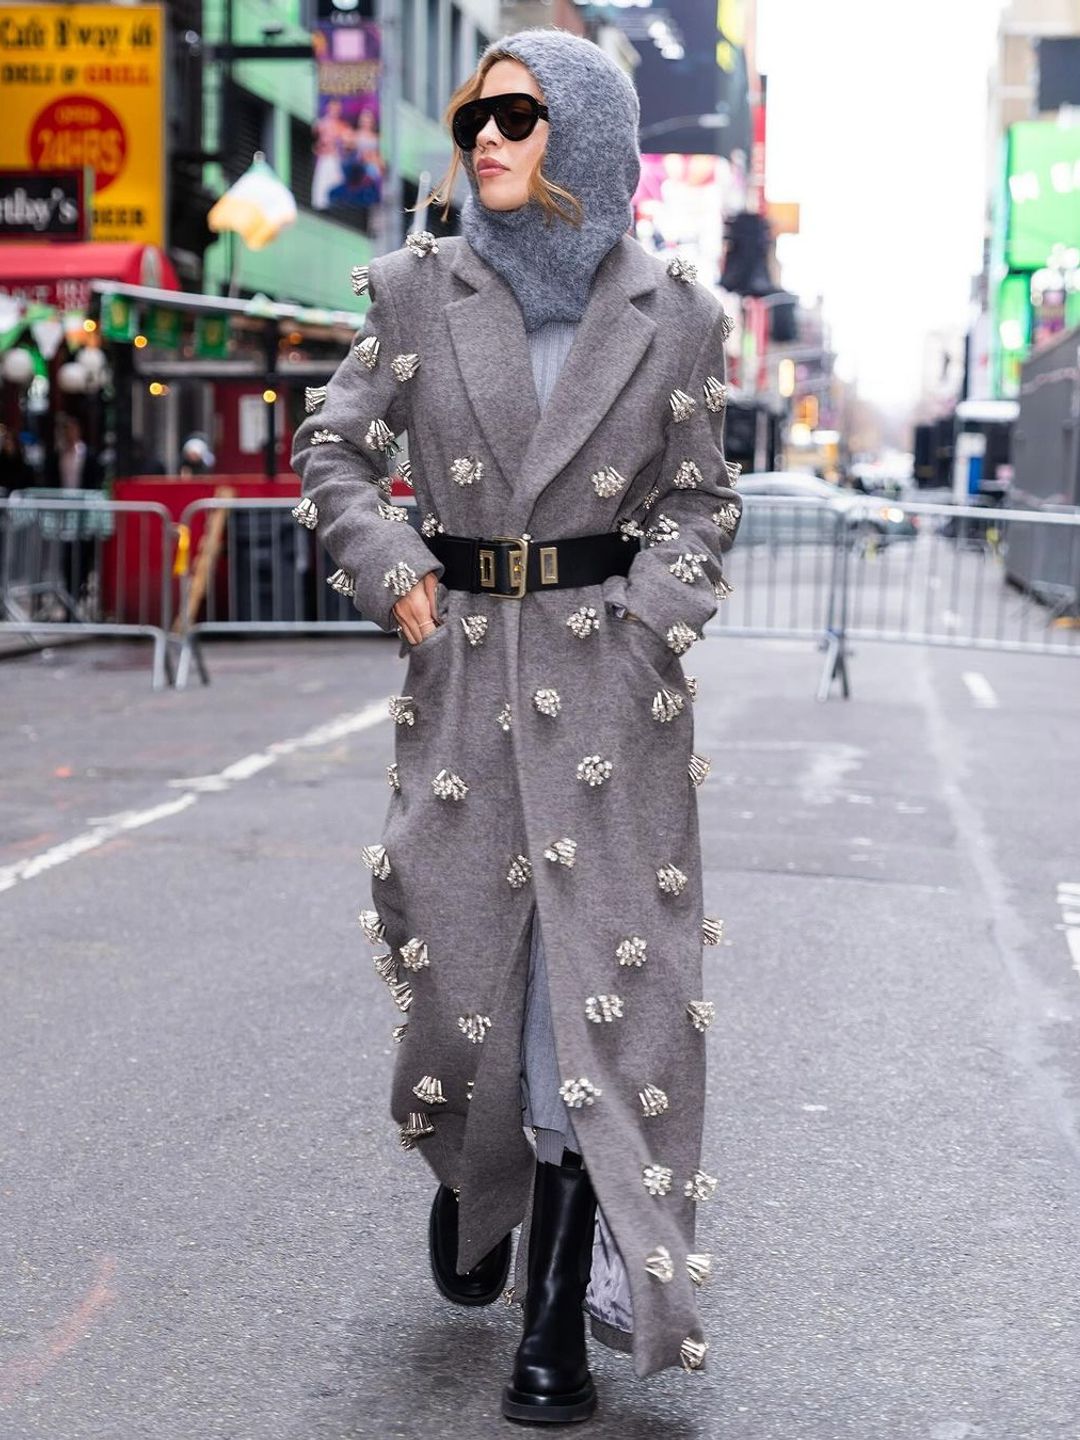 Rita Ora wears a grey hood and matching coat in NYC